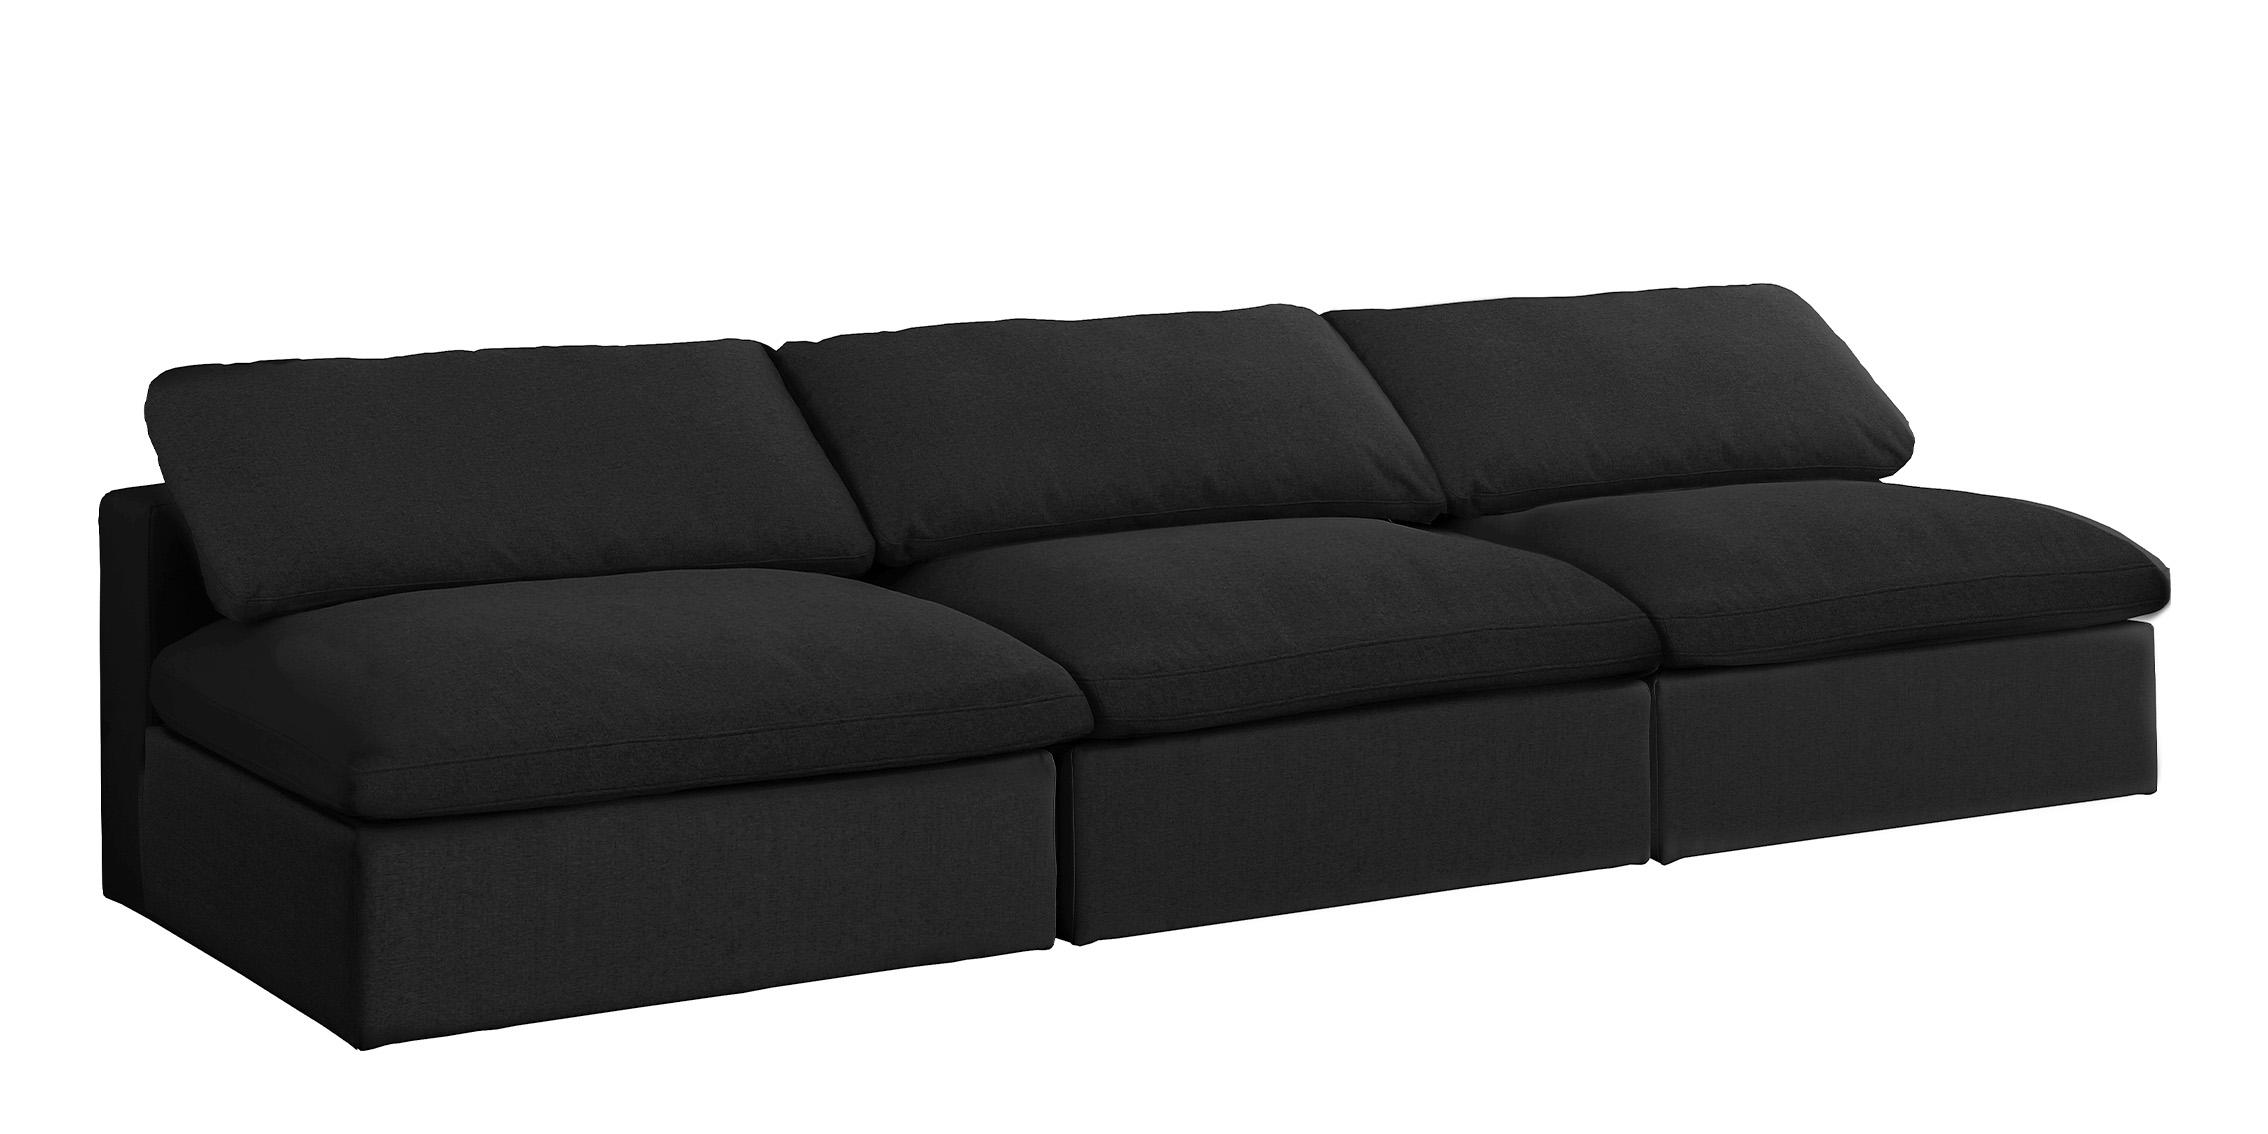 

    
Serene Black Linen Textured Fabric Deluxe Comfort Modular Armless Sofa S117 Meridian
